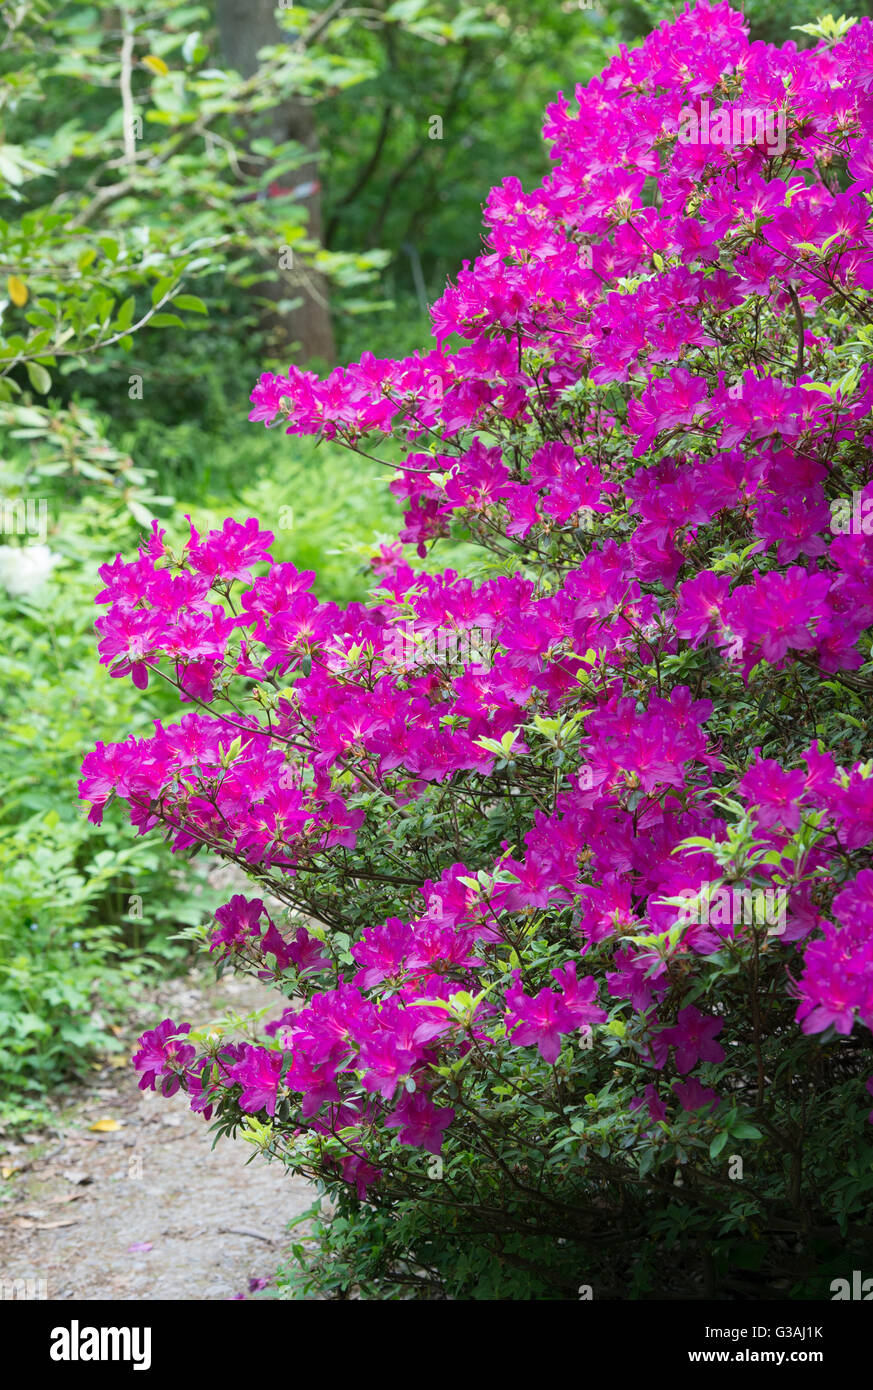 Rhododendron chanticleer shrub flowering Stock Photo